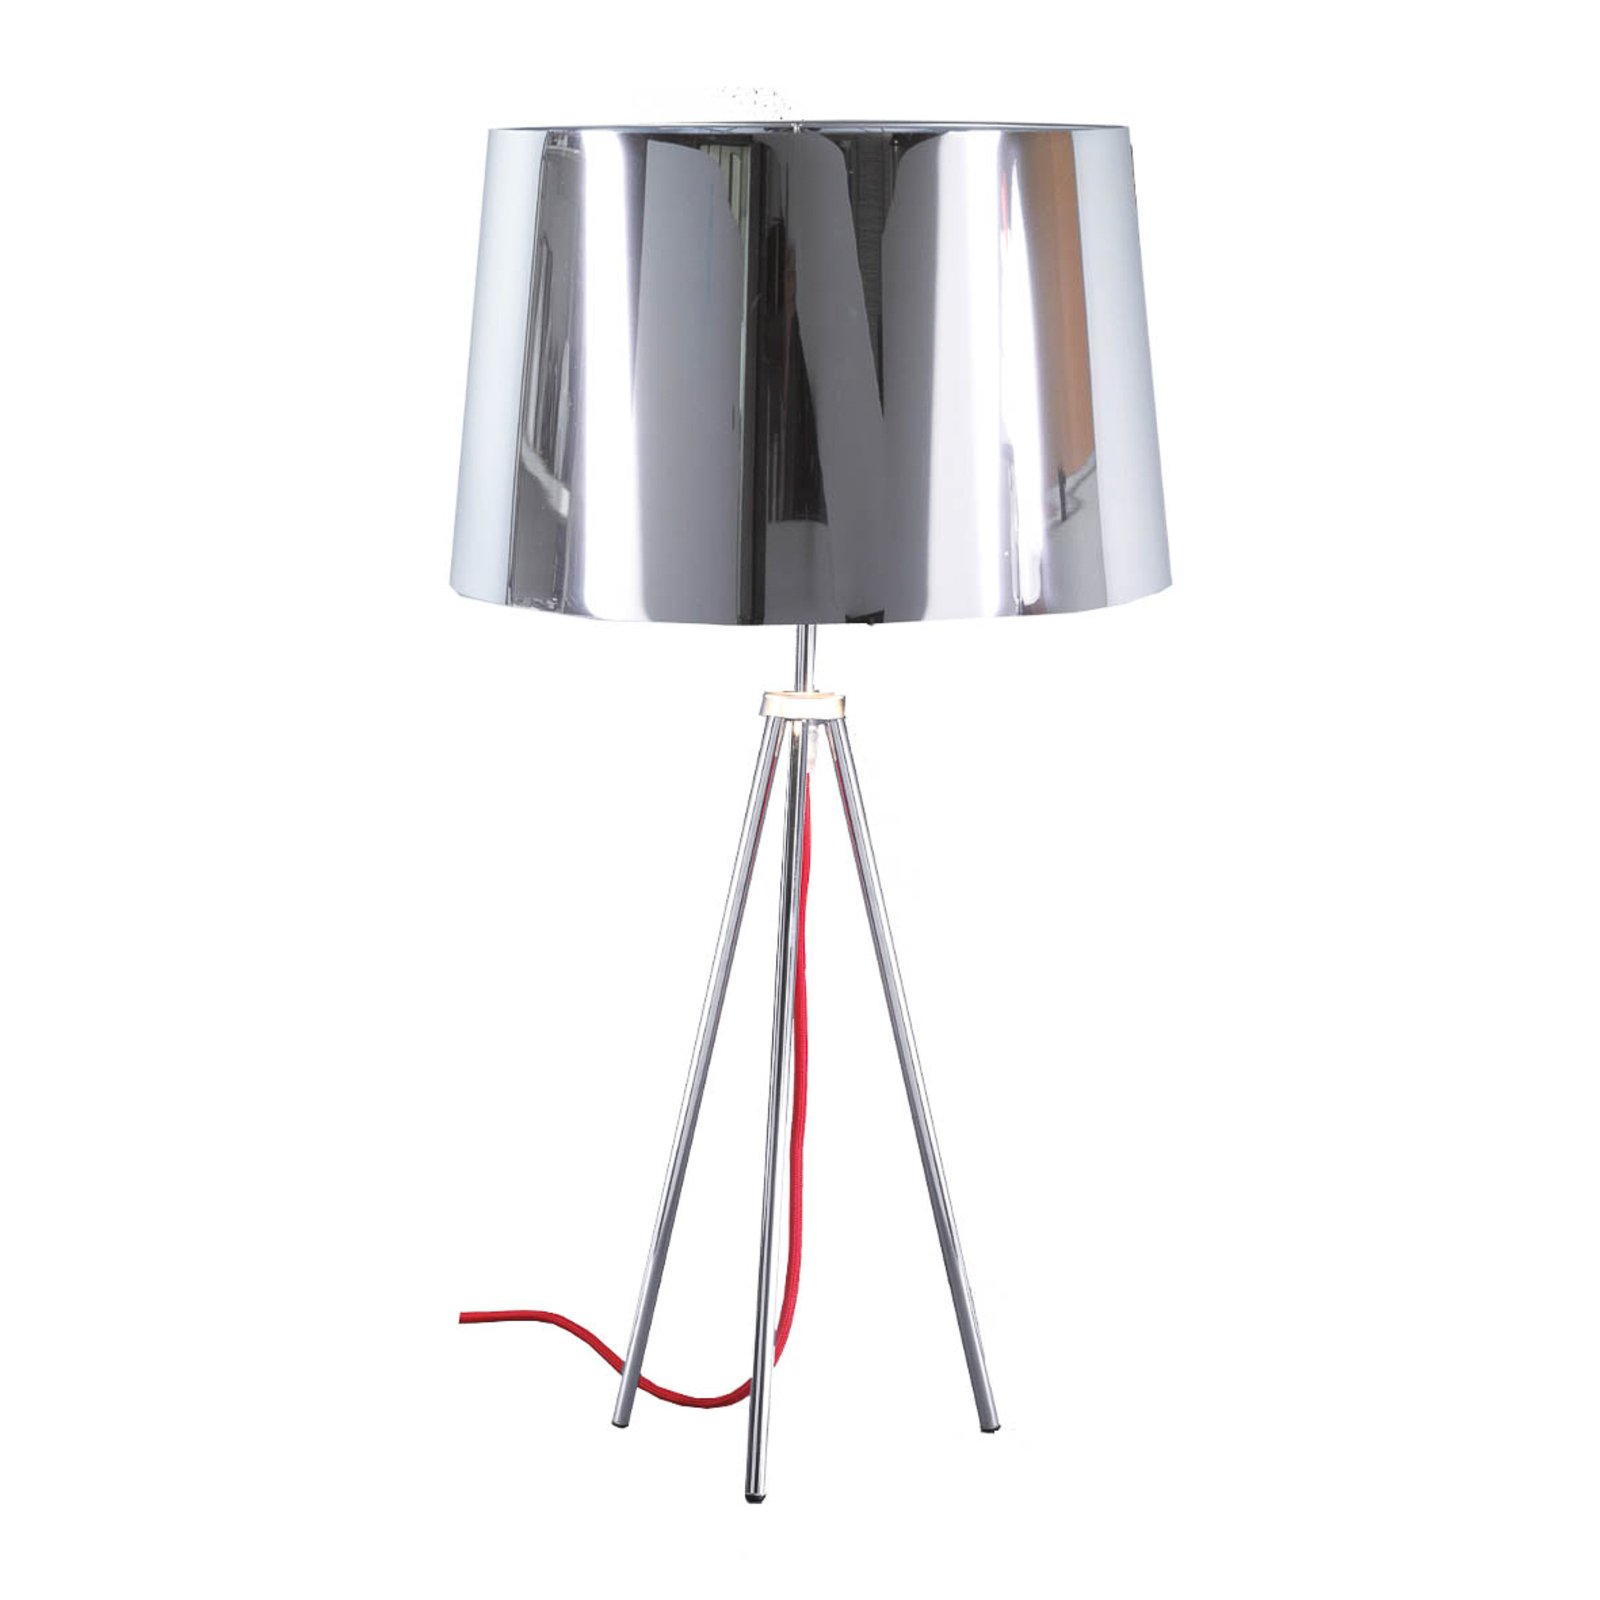 Aluminor Tropic stolna lampa krom, crveni kabel